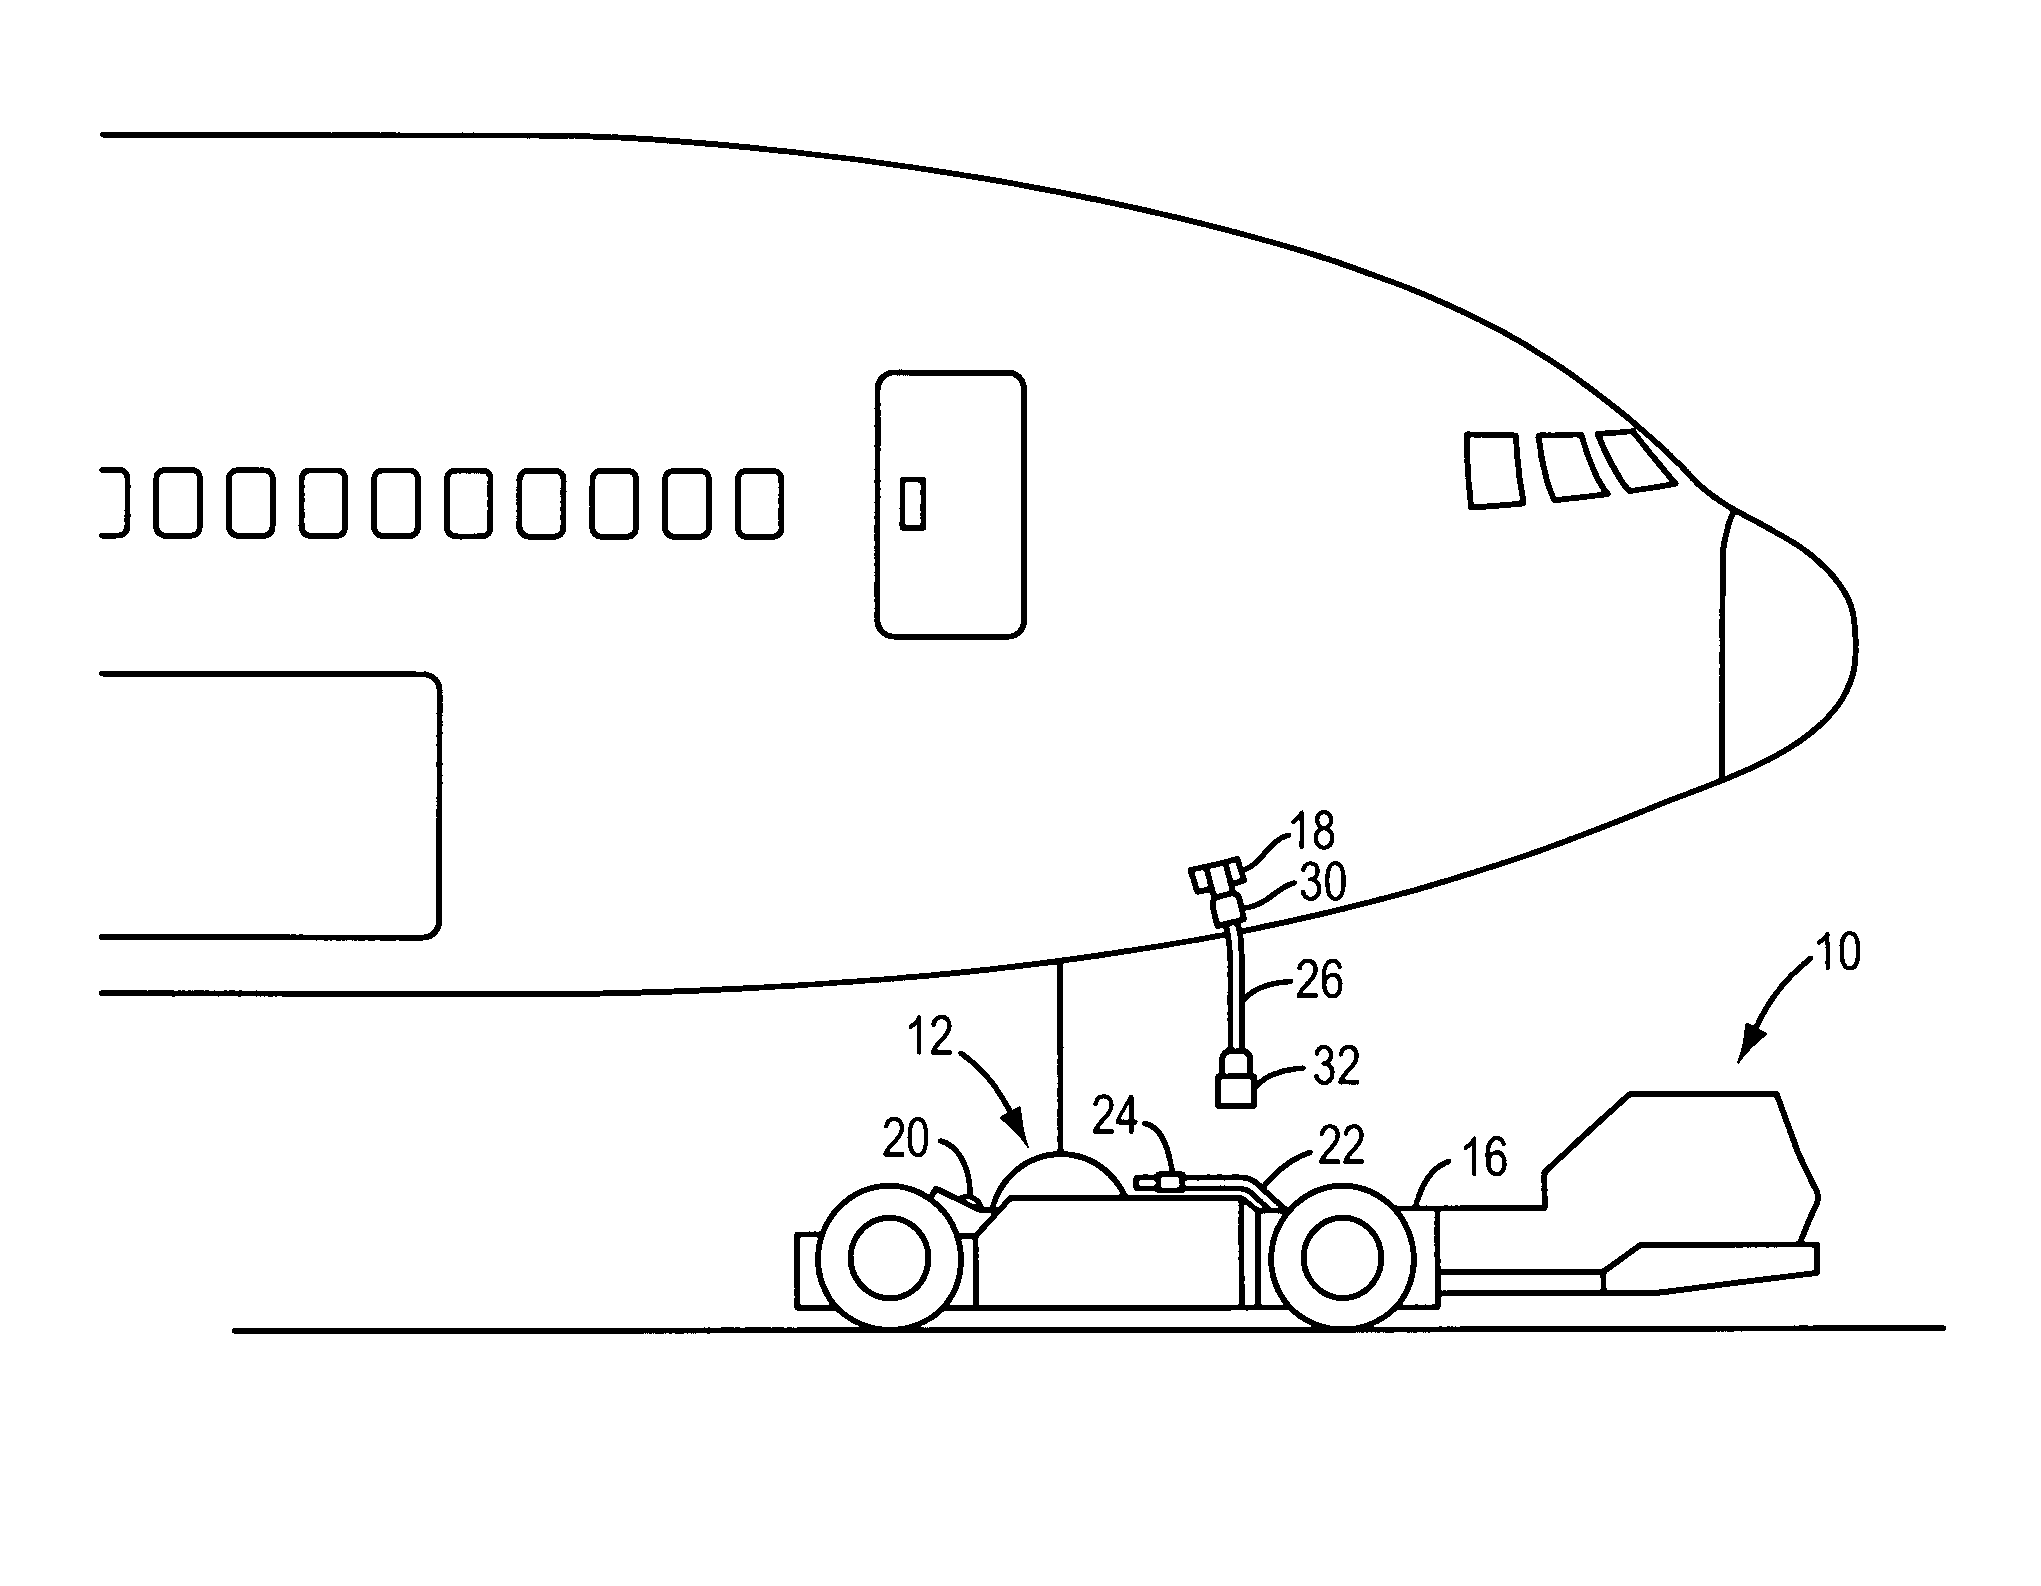 Aircraft GPU connection method and apparatus